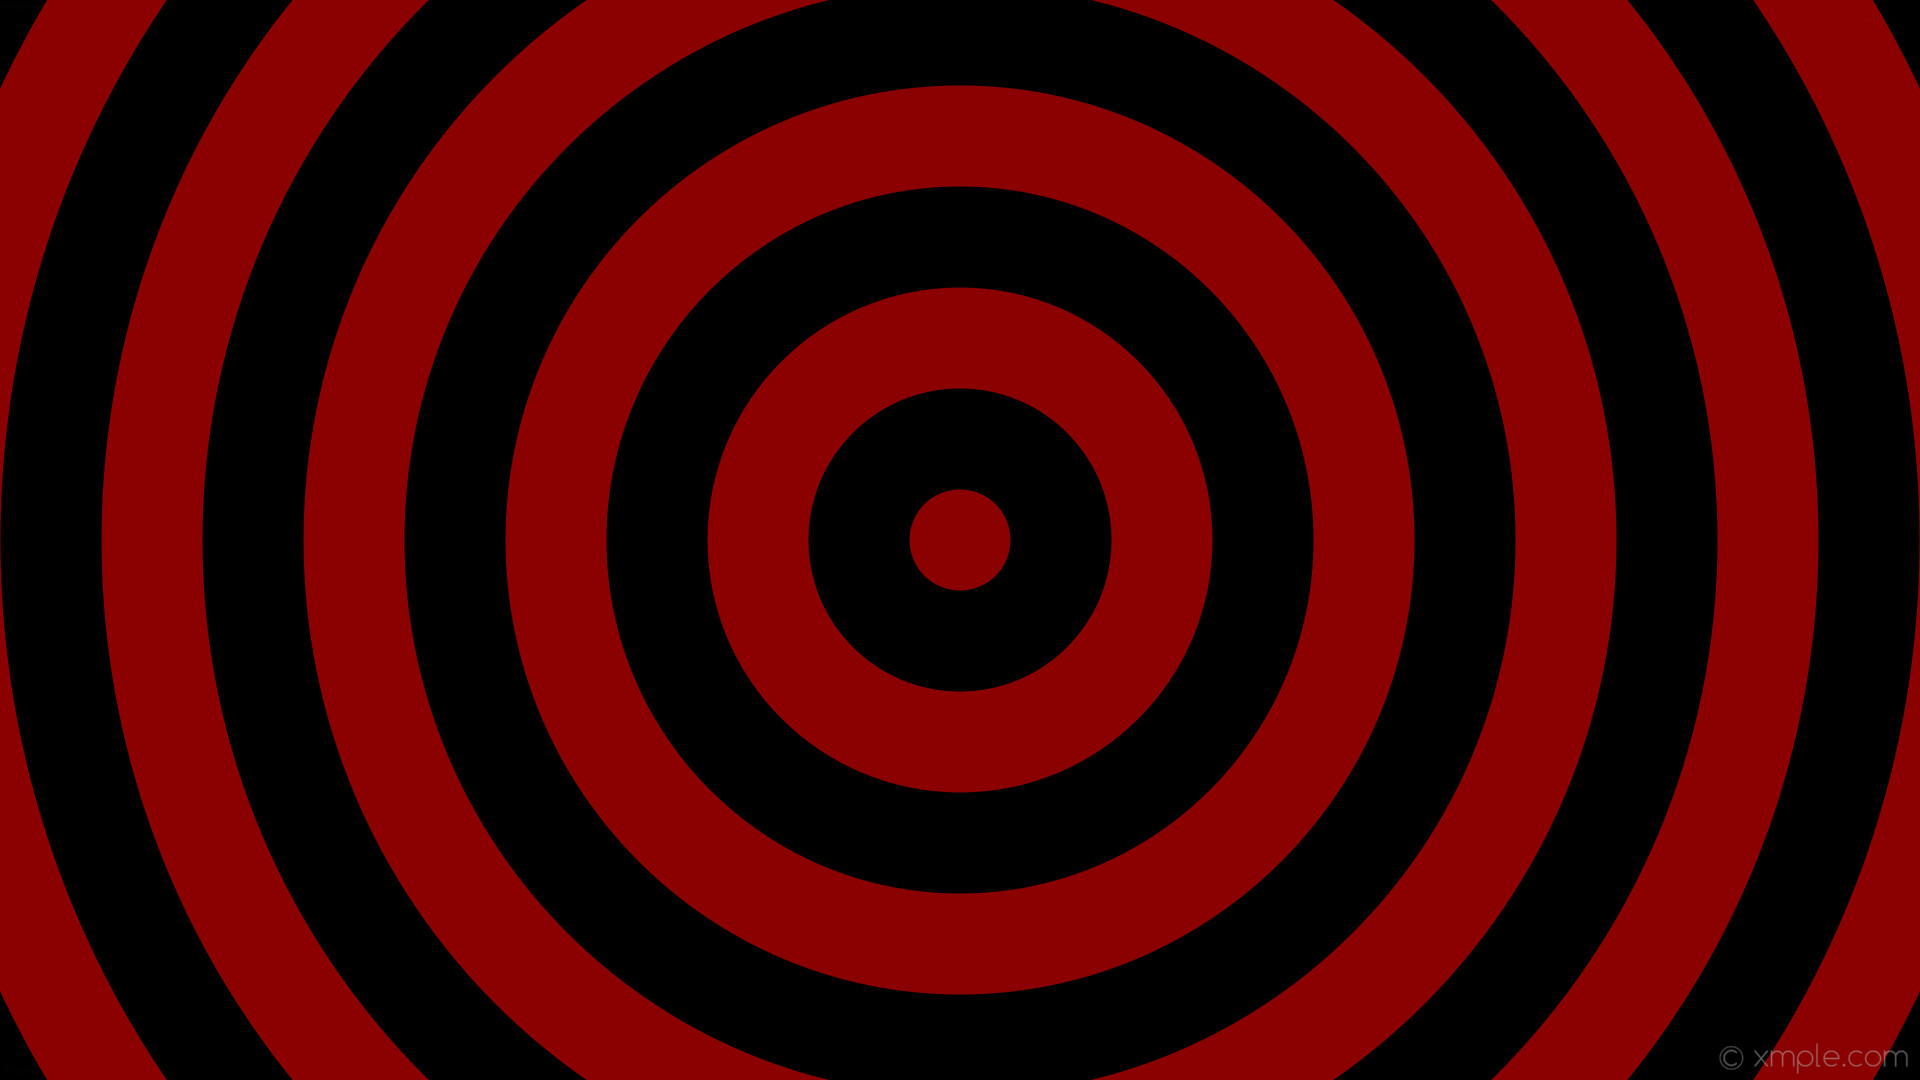 1920x1080 wallpaper circles black concentric drop shadow rings red dark red #000000  #8b0000 19 12